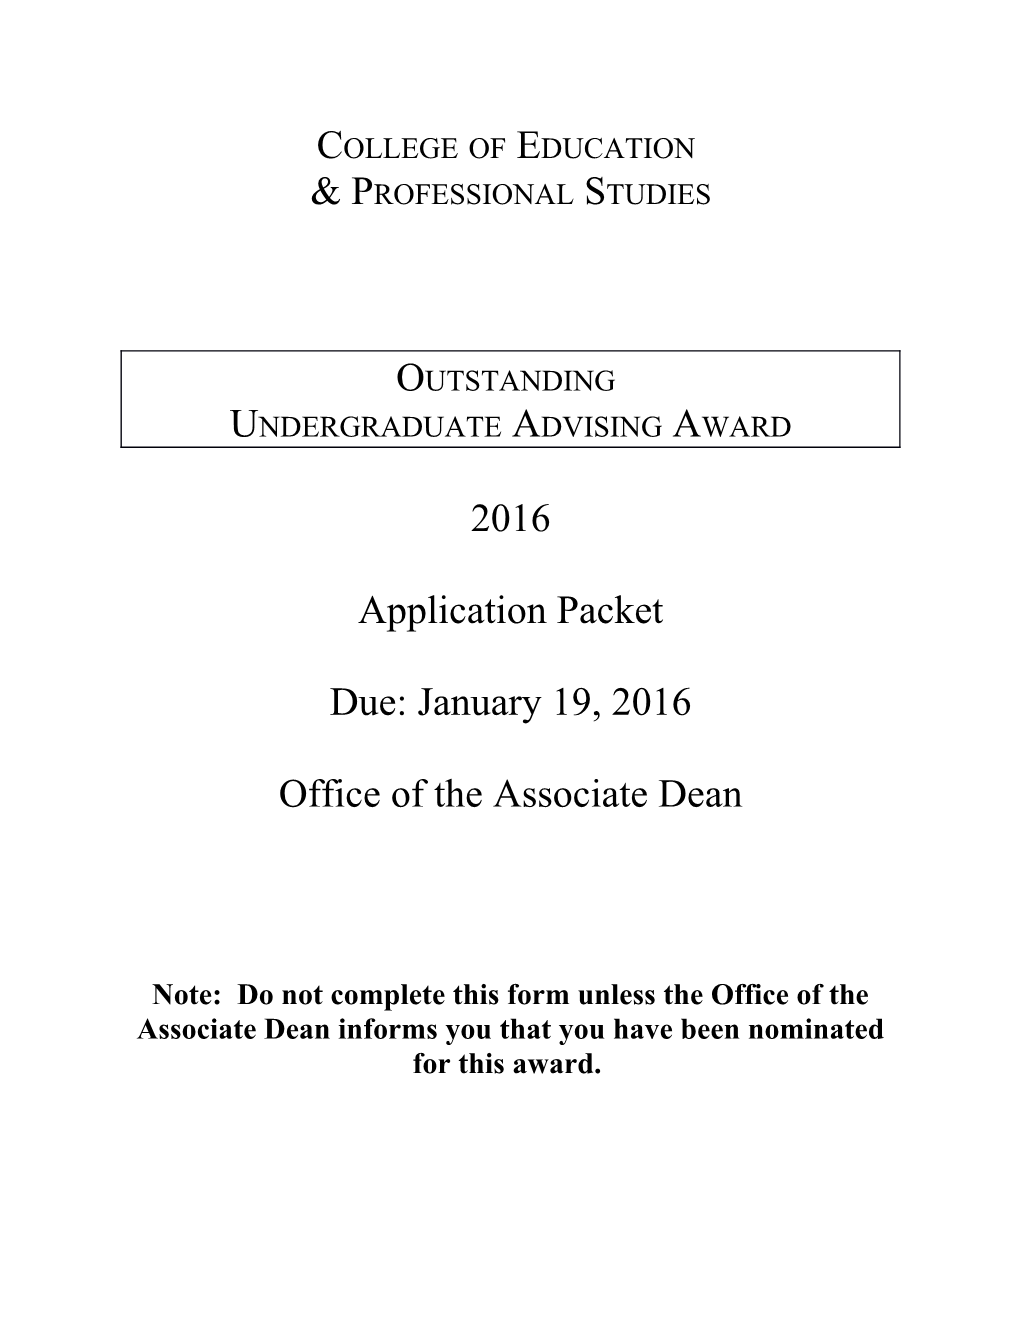 Outstanding Undergraduate Advising Award